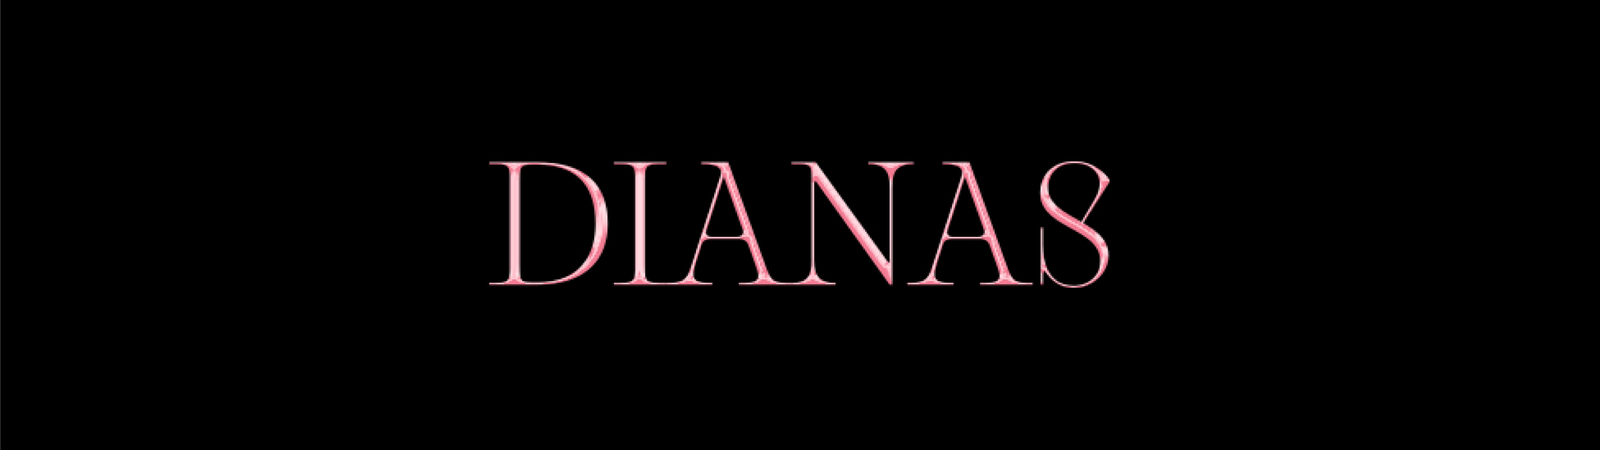 Dianas